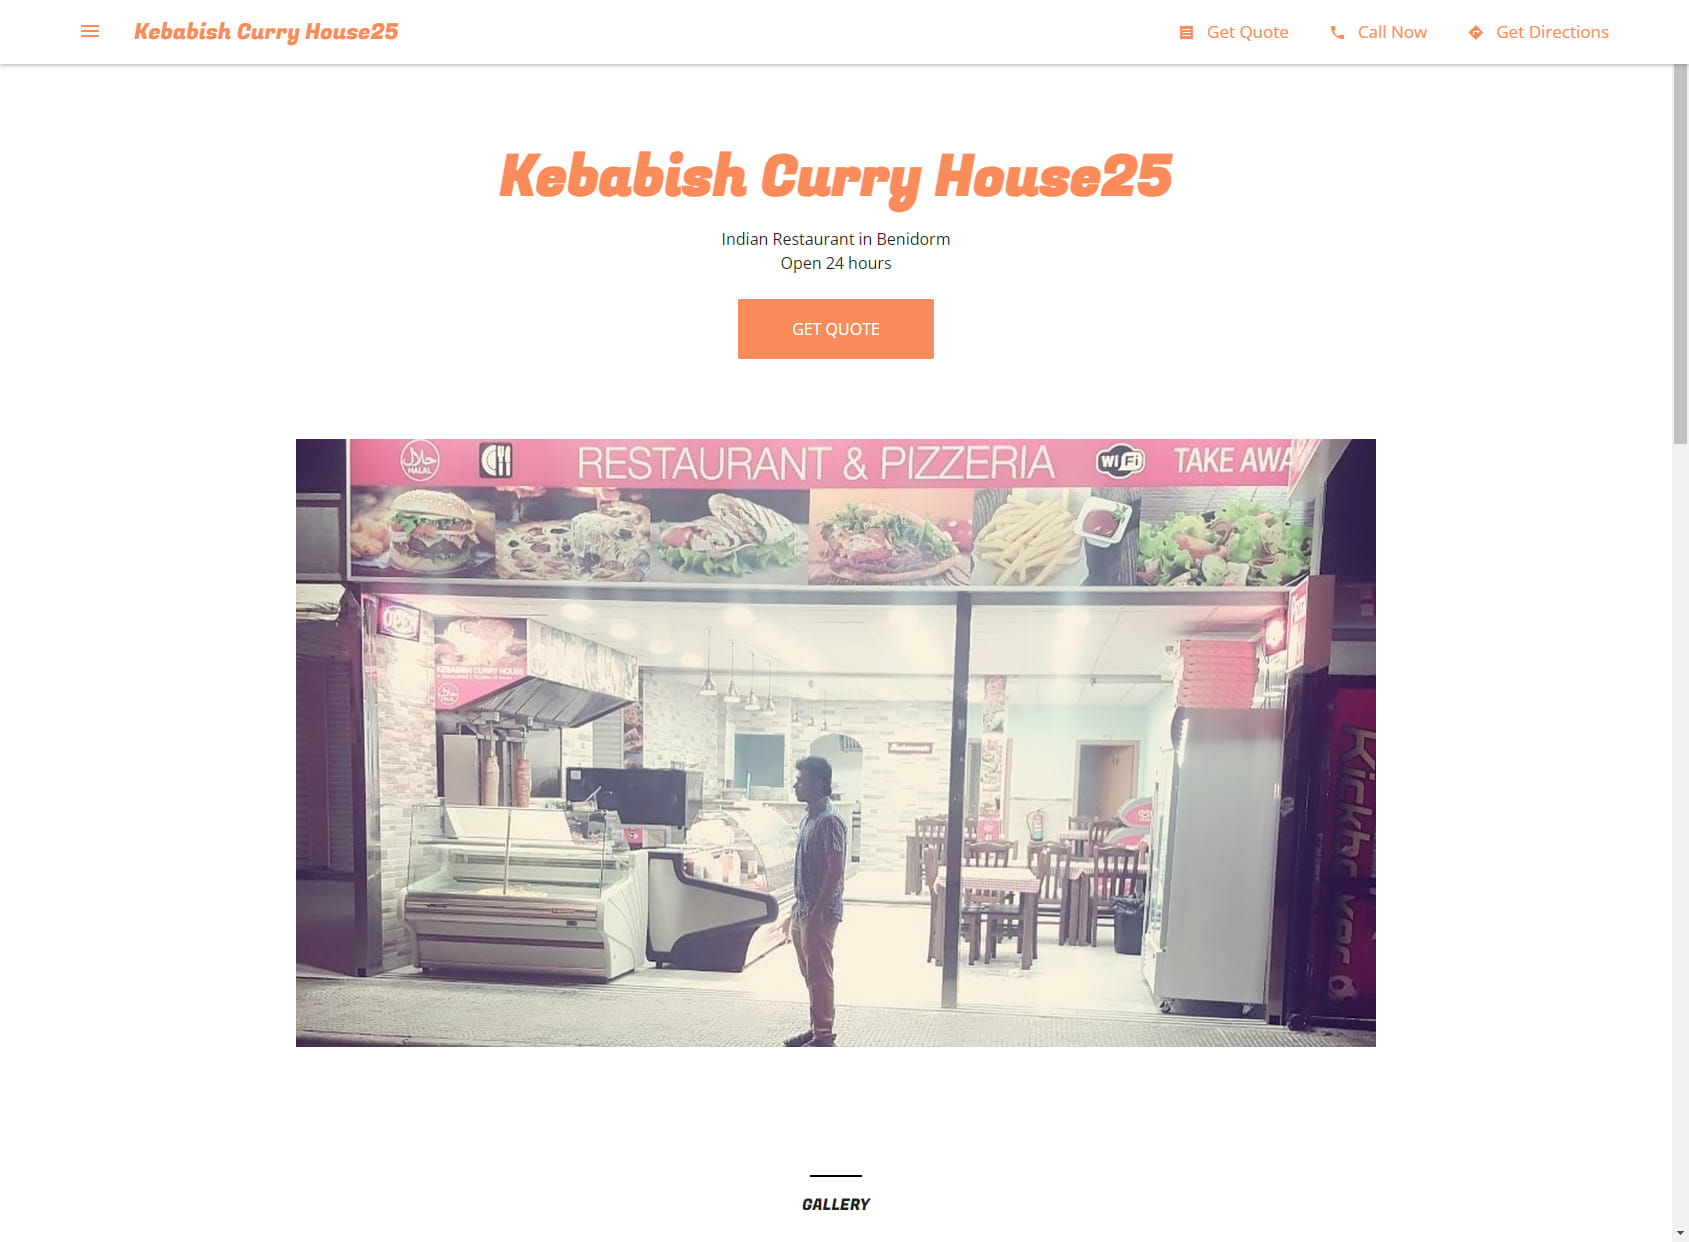 Kebabish curry house Europe